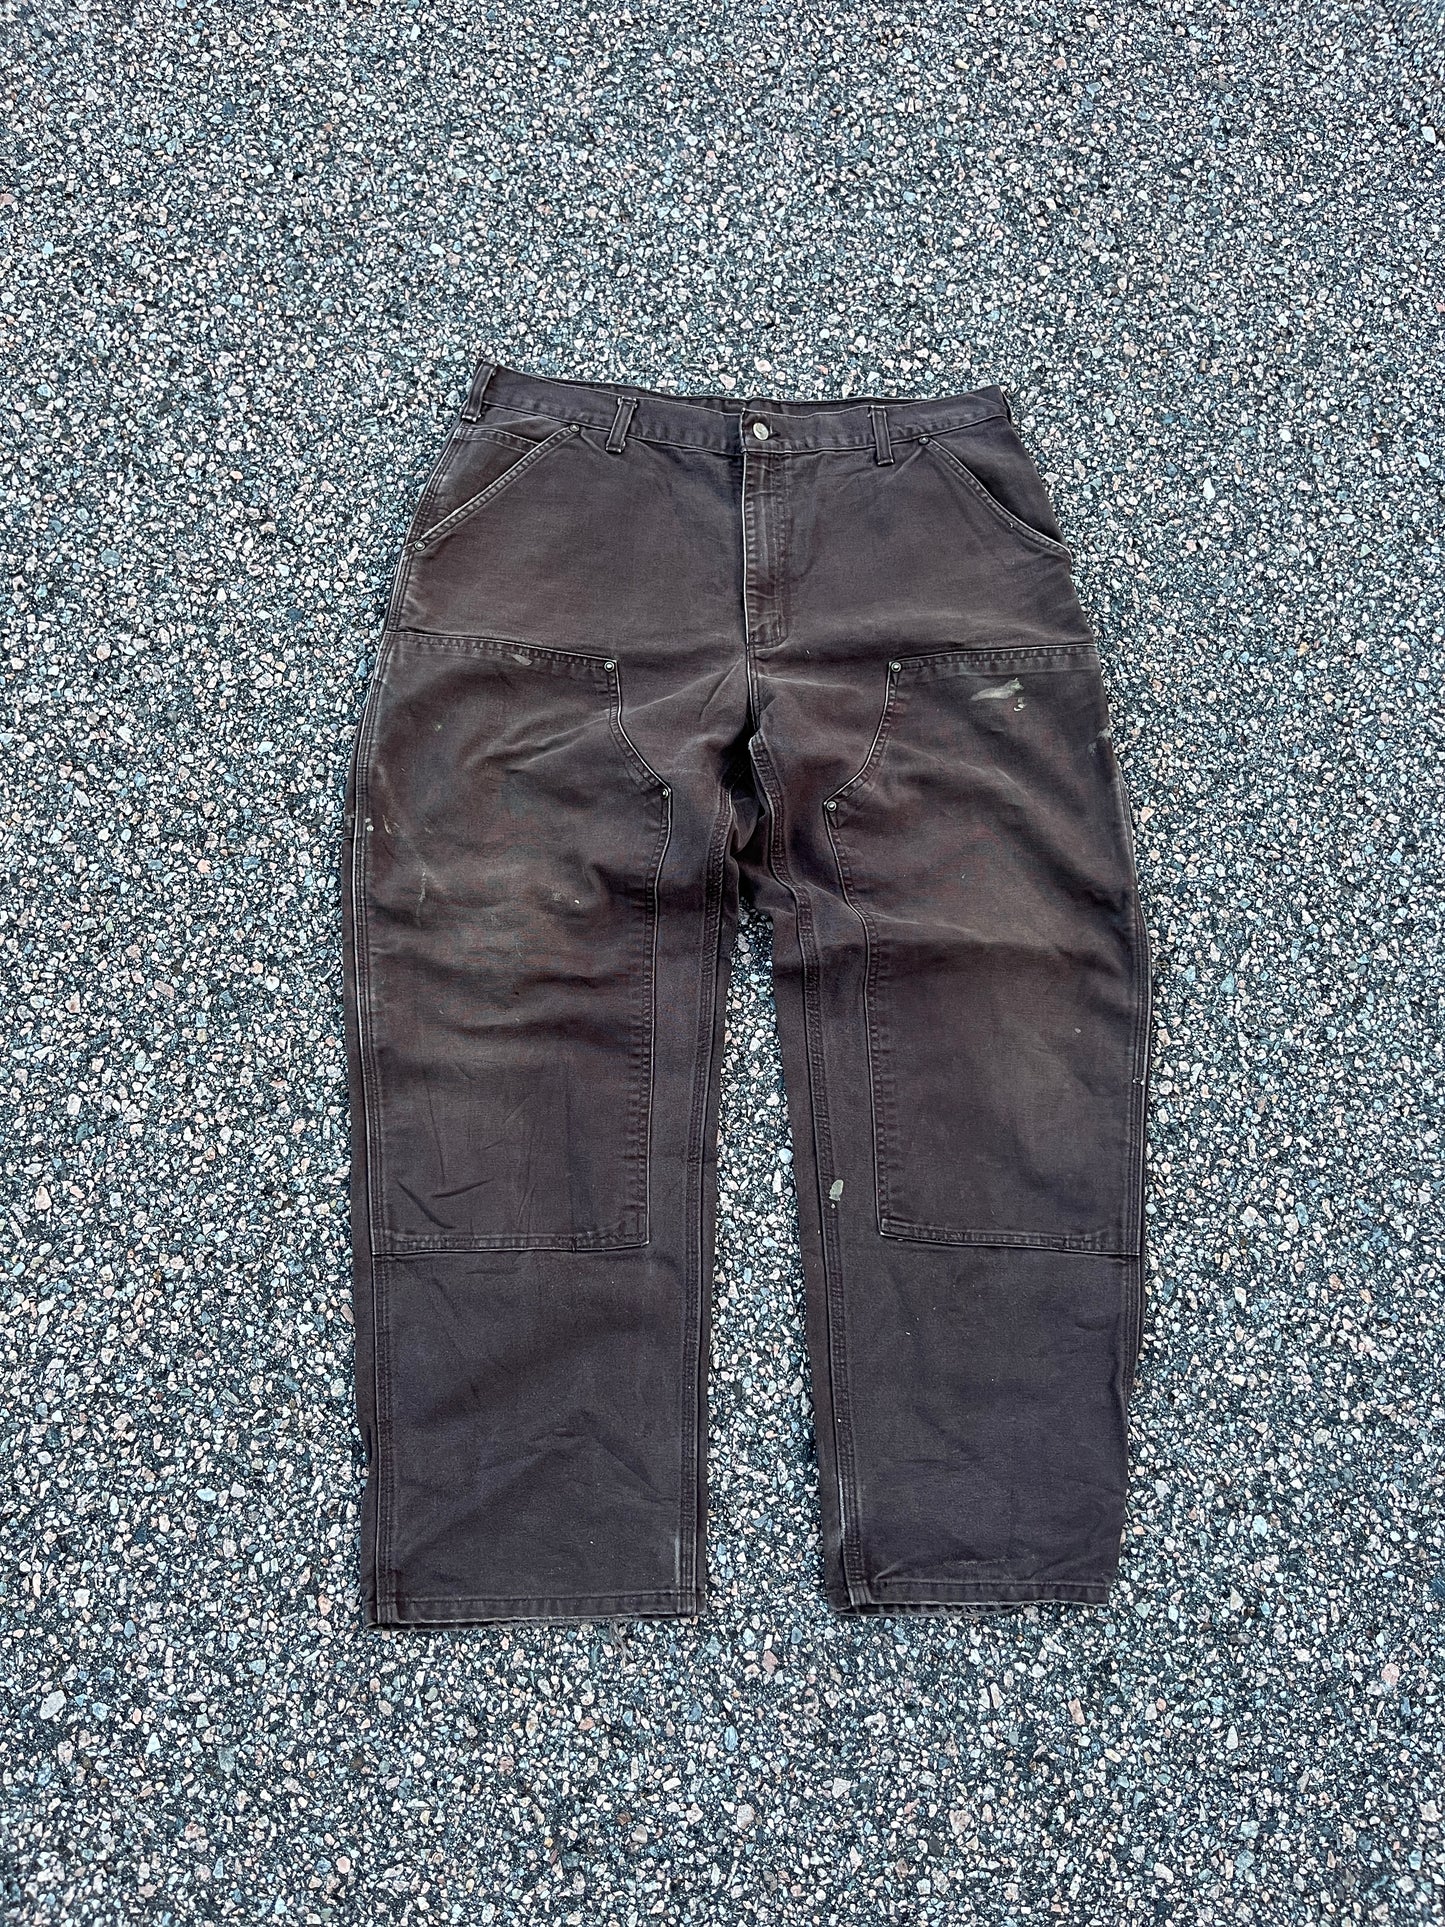 Faded Brown Carhartt Double Knee Pants - 37 x 29.5